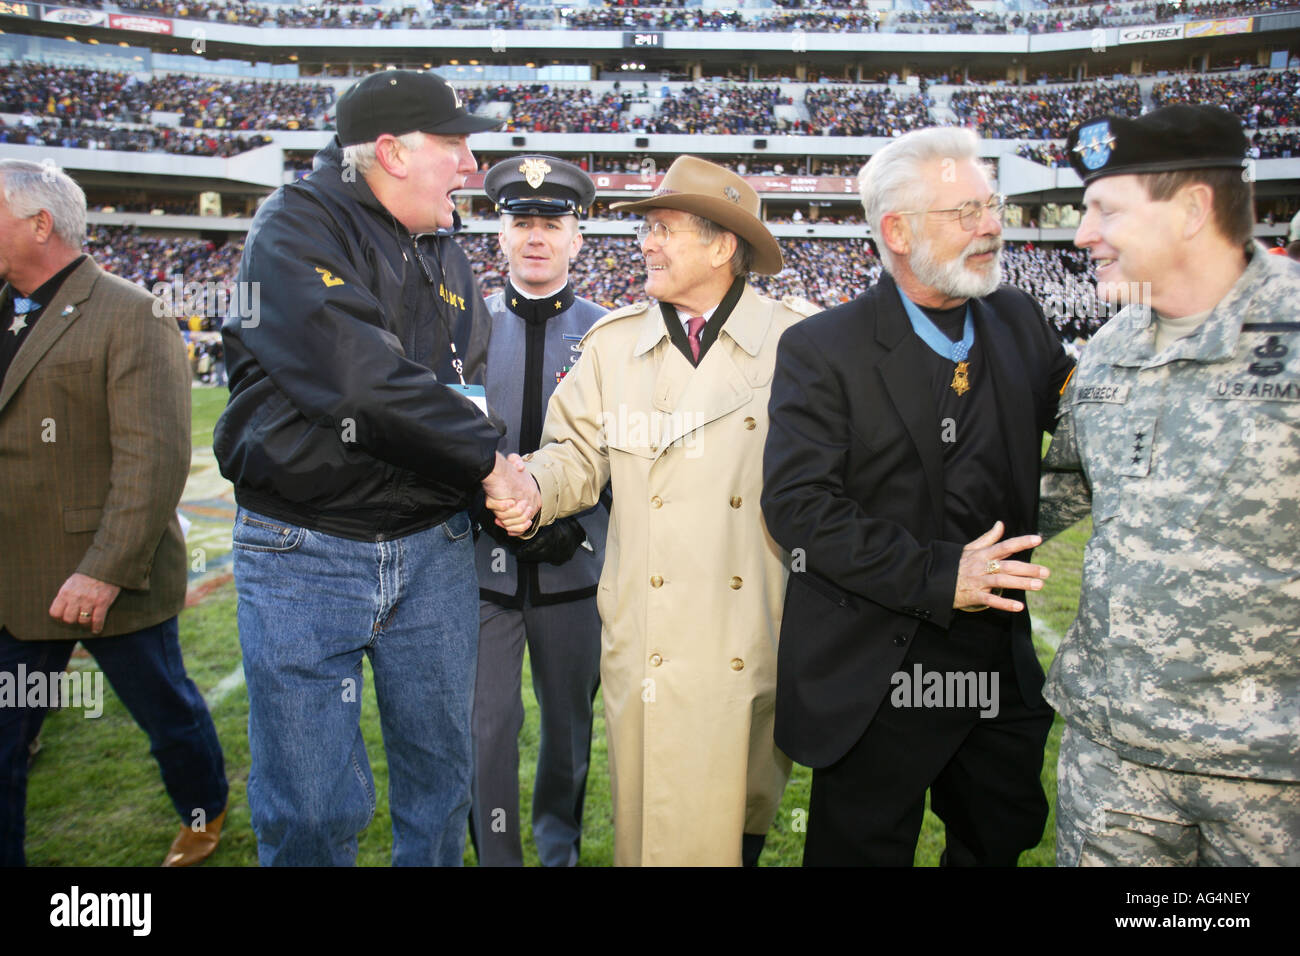 donald rumsfeld at the army navy football match in philidelphia Stock Photo